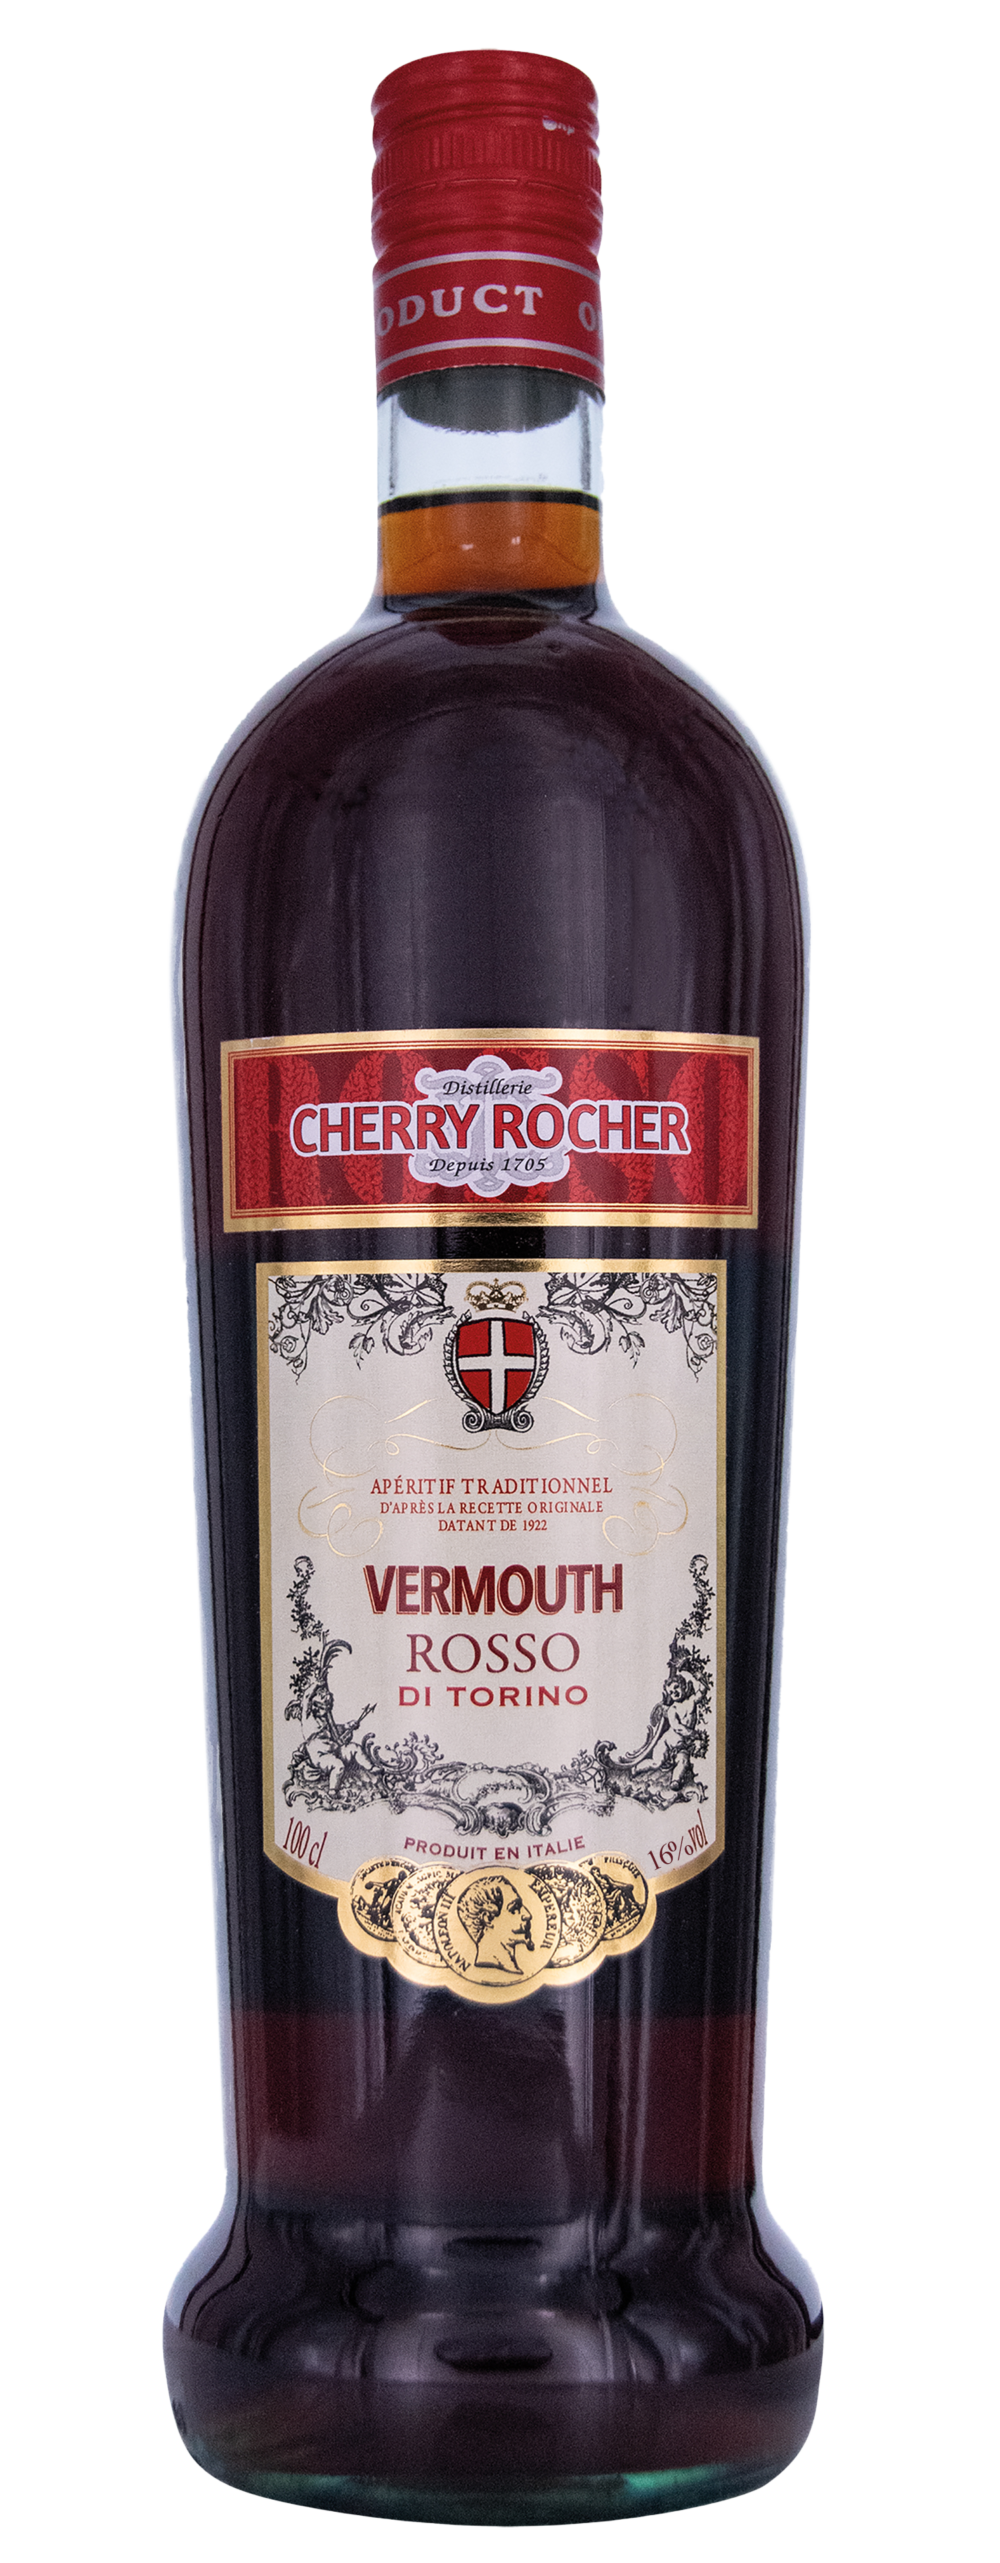 Vermouth Rosso de Turin / Turin Red Vermouth - Vermouths - Cherry-rocher